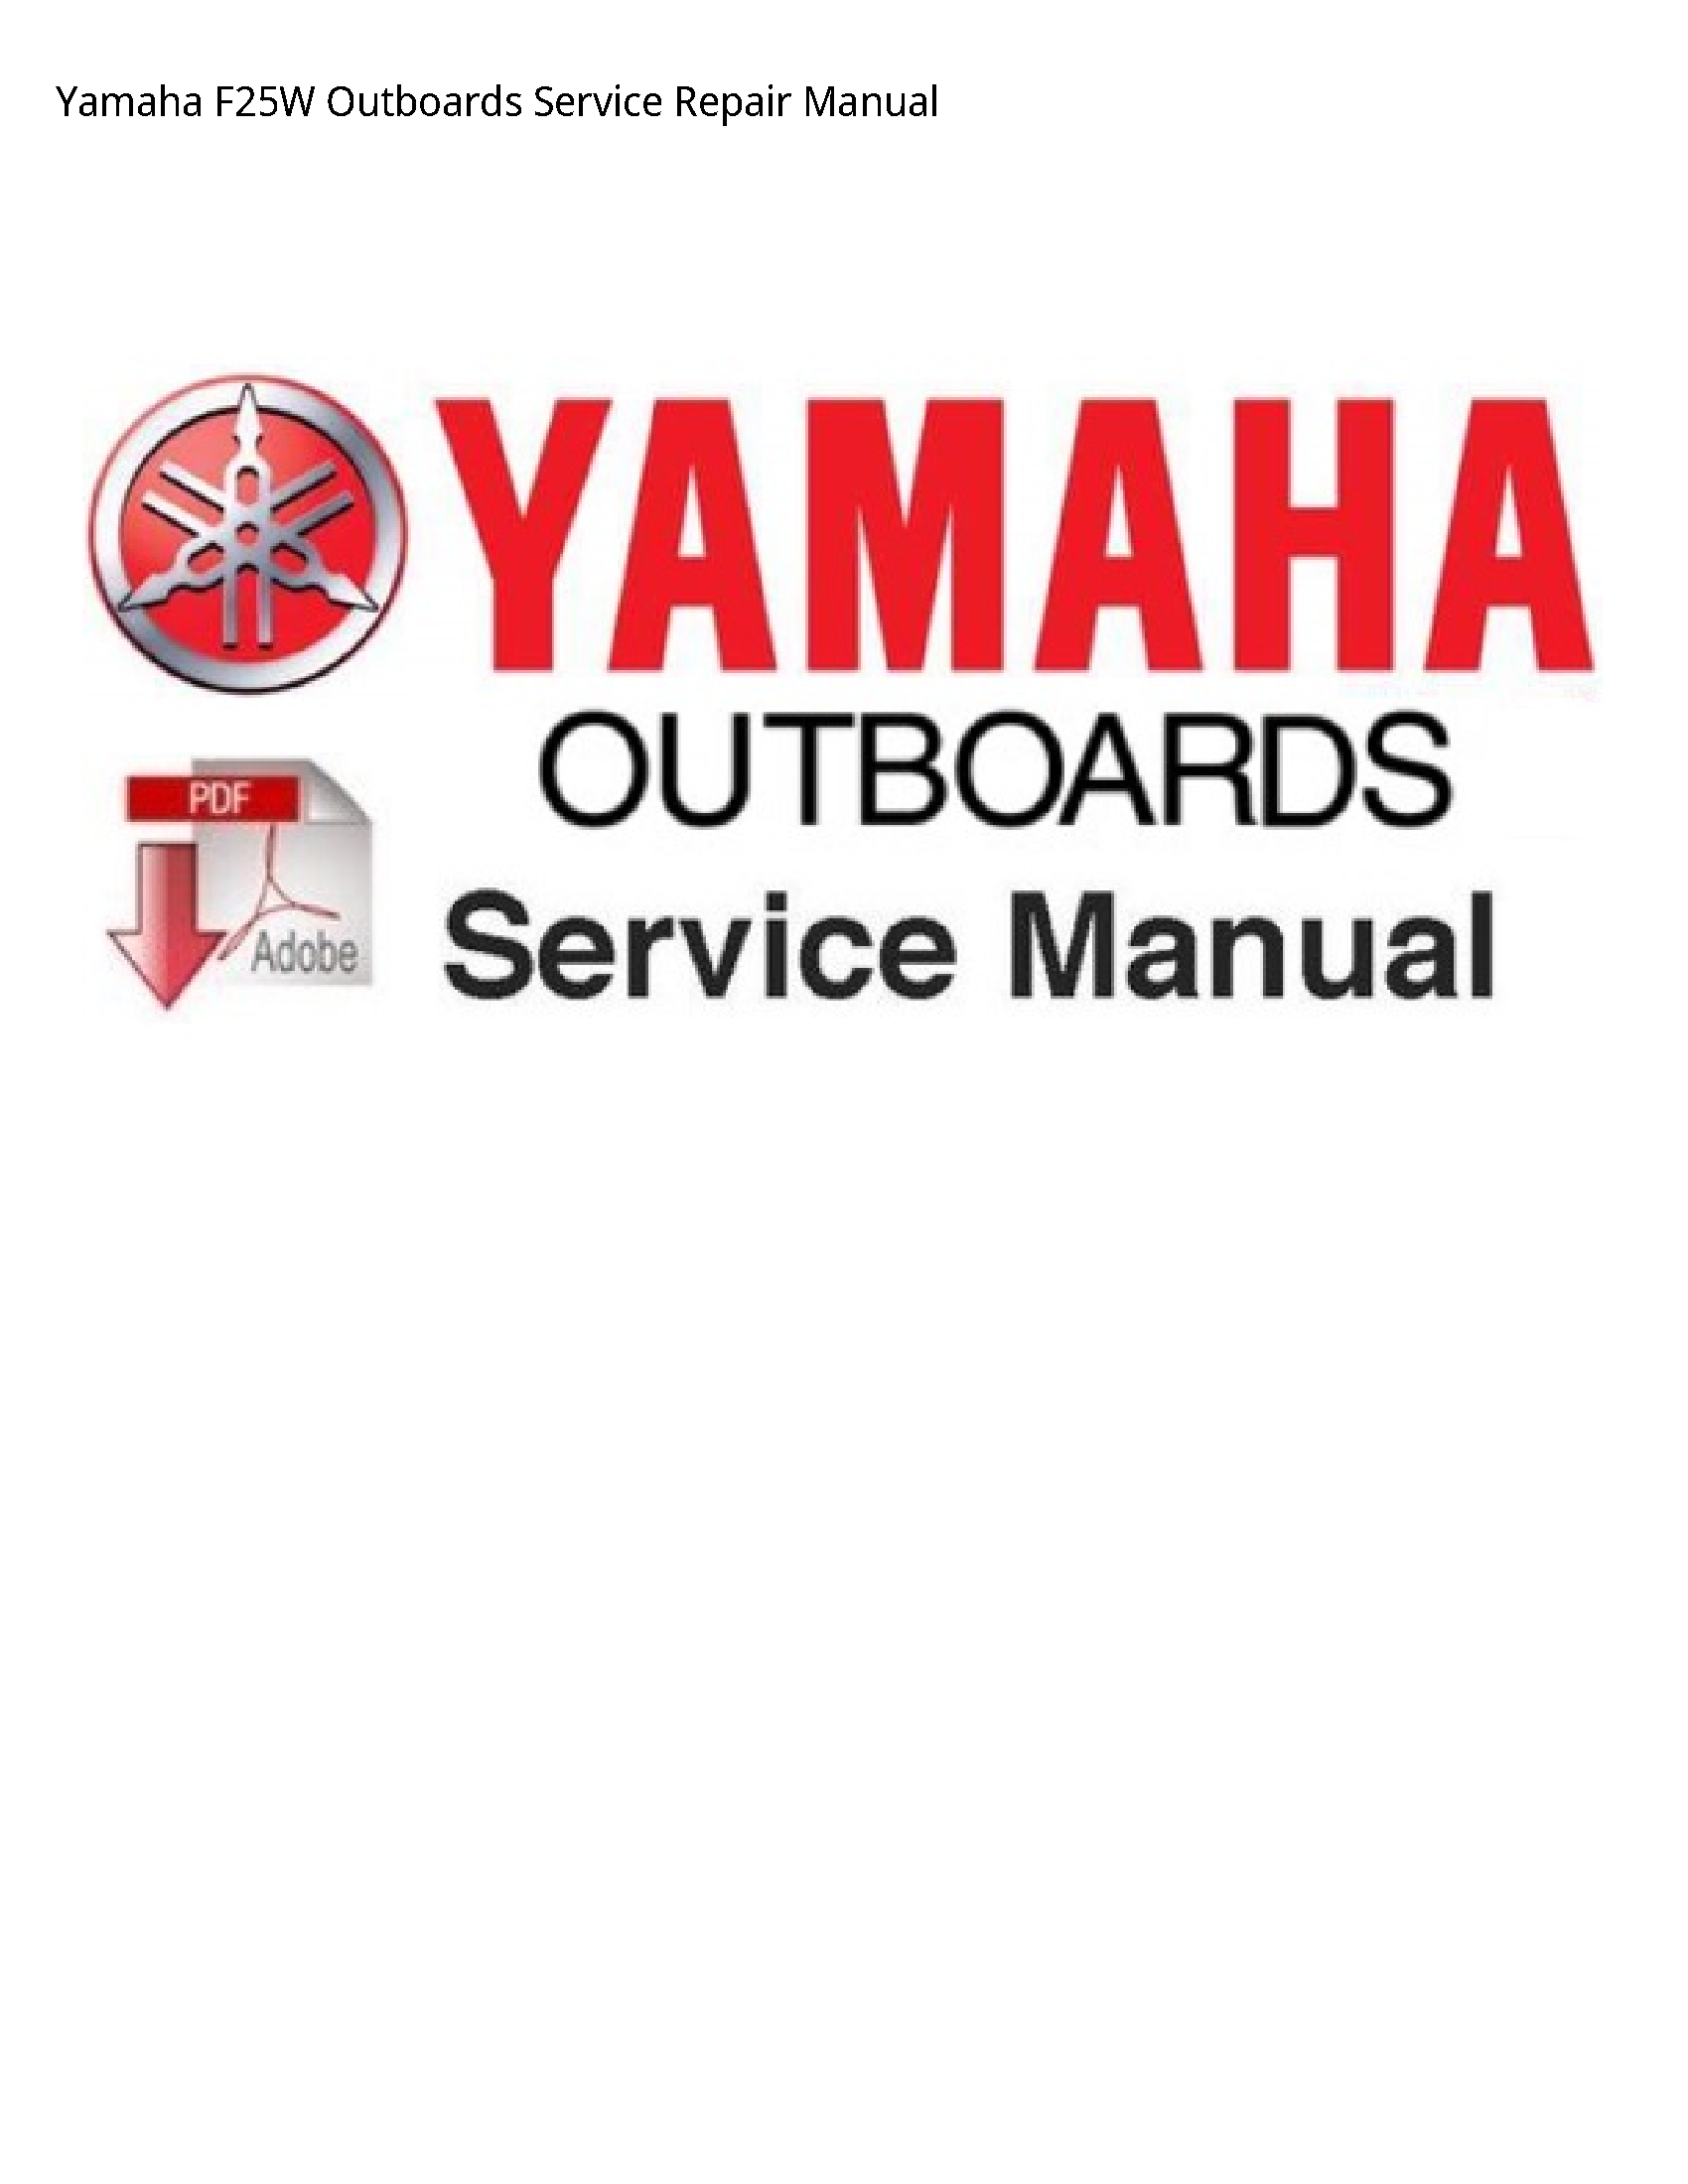 Yamaha F25W Outboards manual